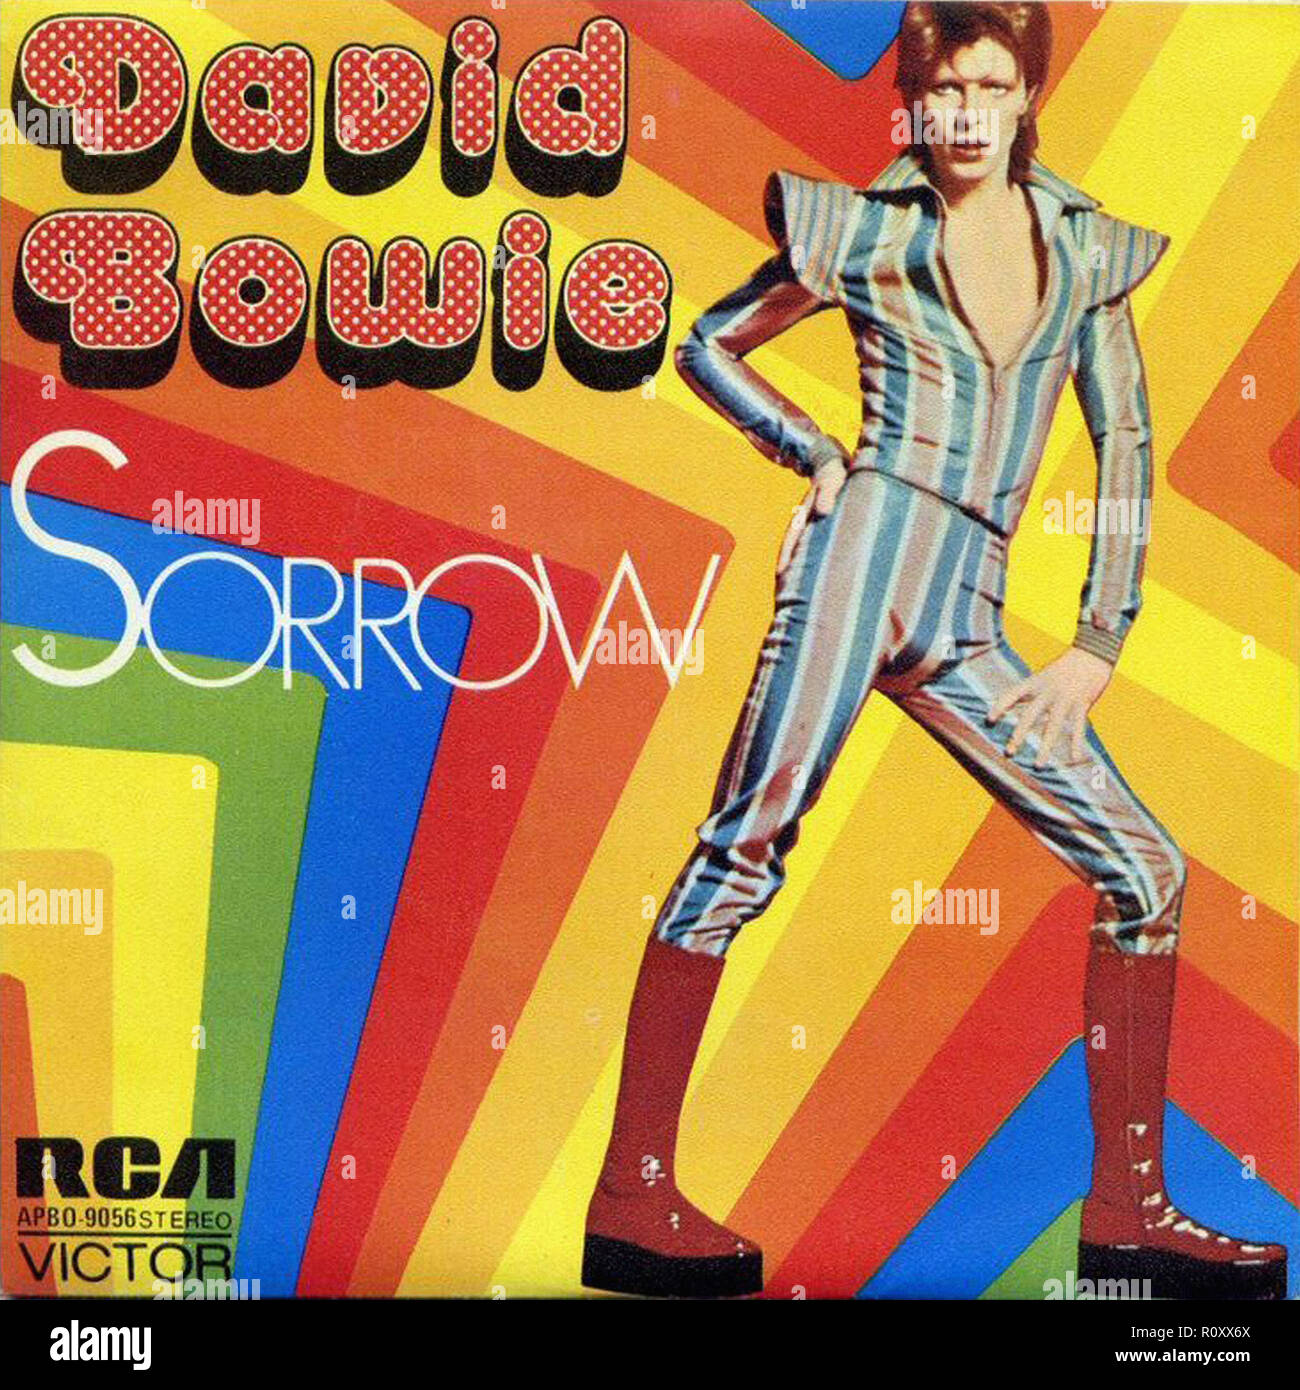 DAVID BOWIE - SORROW - Vintage cover album Stock Photo